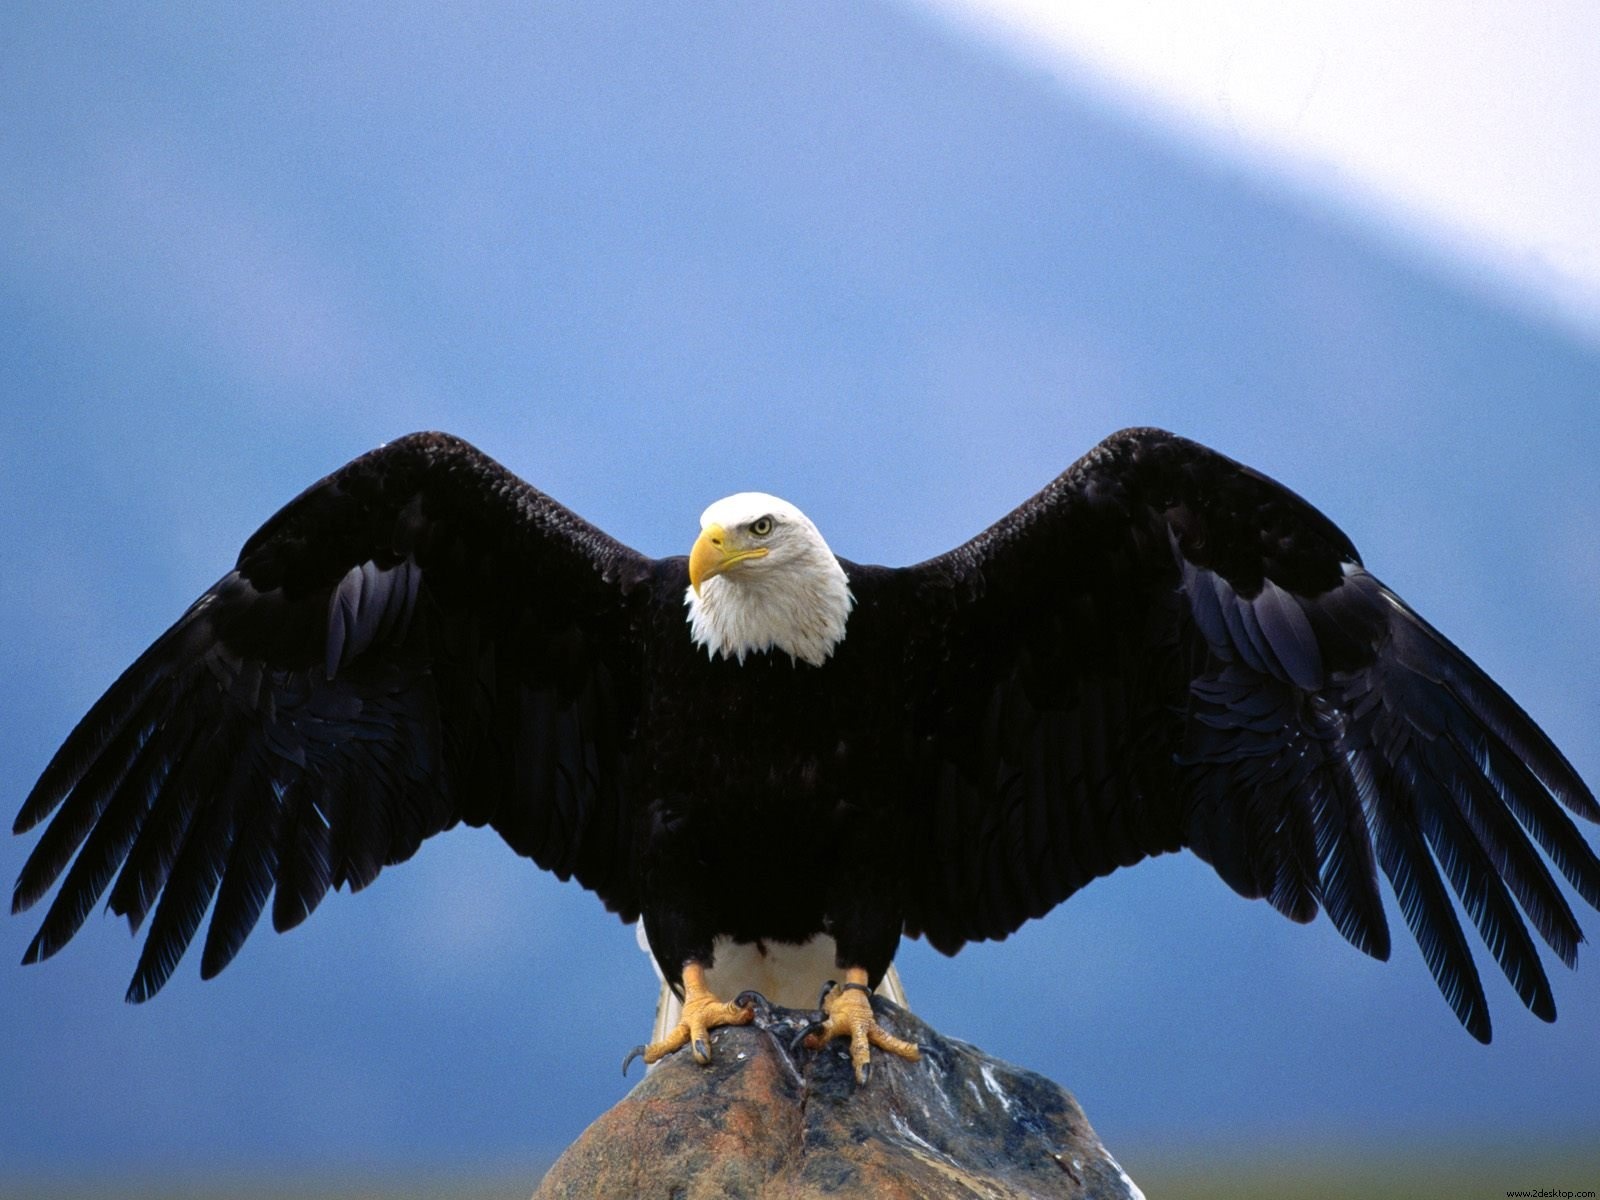 A majestic eagle soaring through the sky.